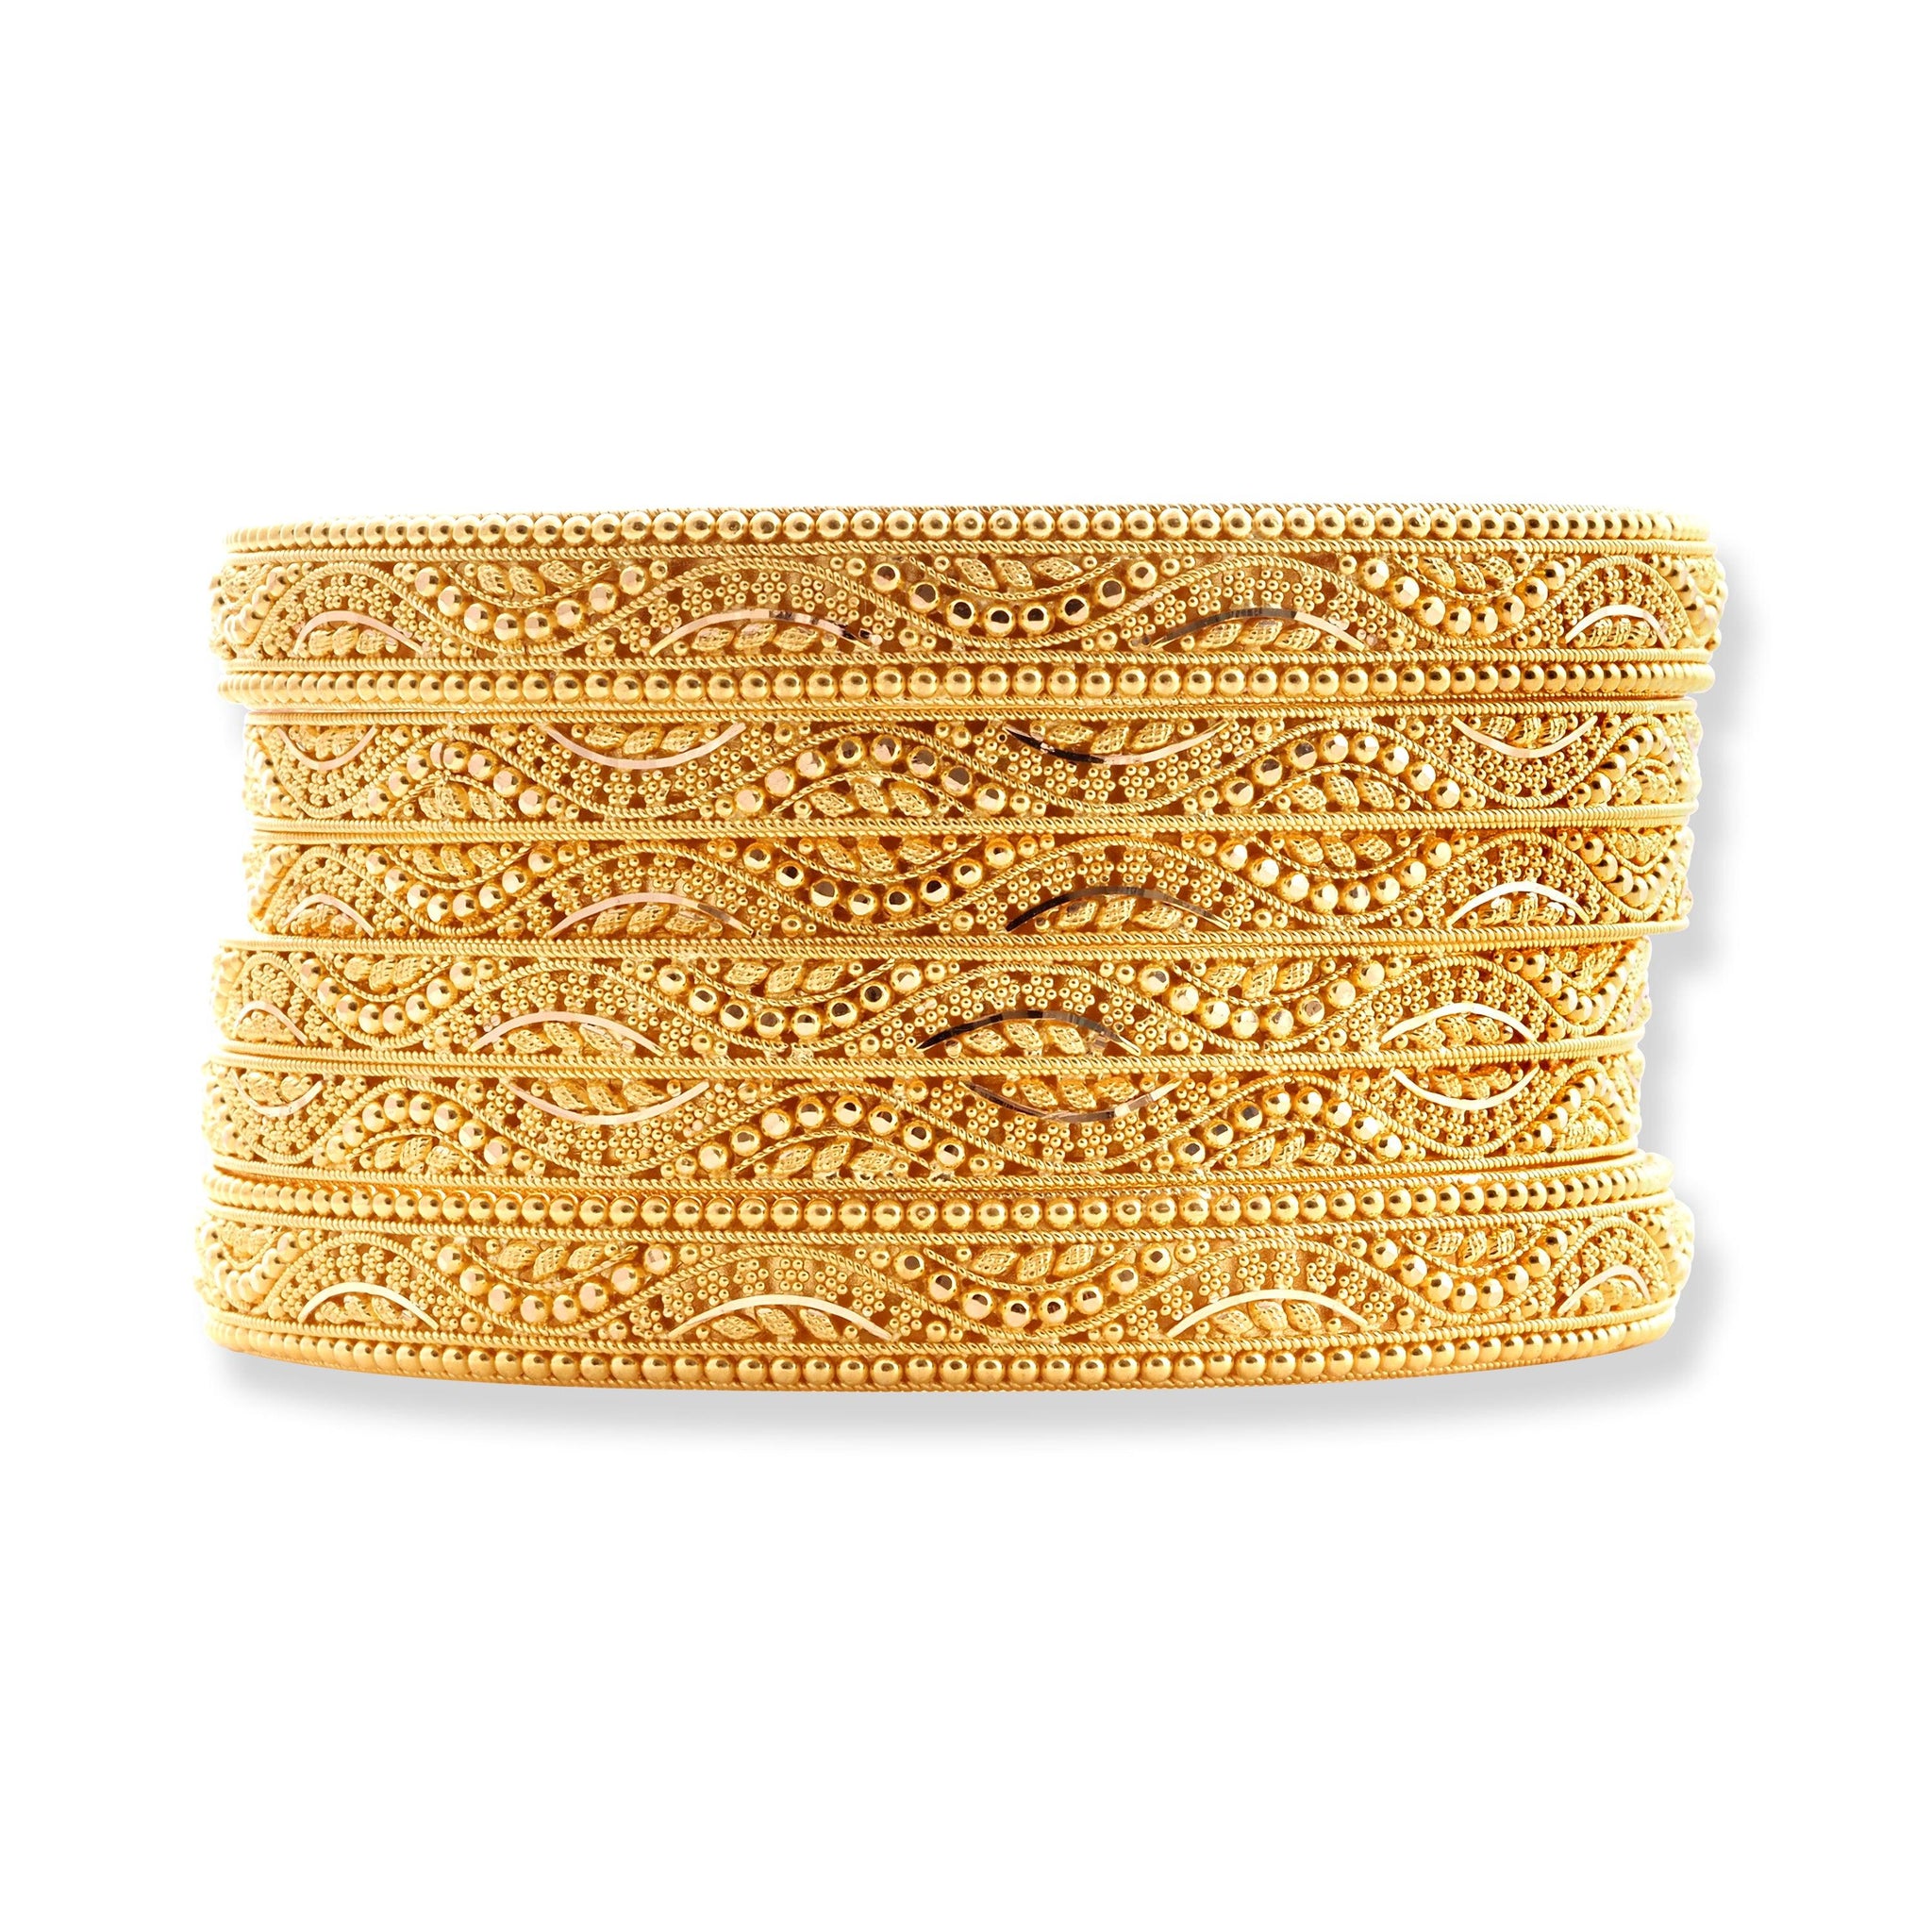 Set of Six 22ct Gold Bangles with Diamond Cut Bead Design B-8569